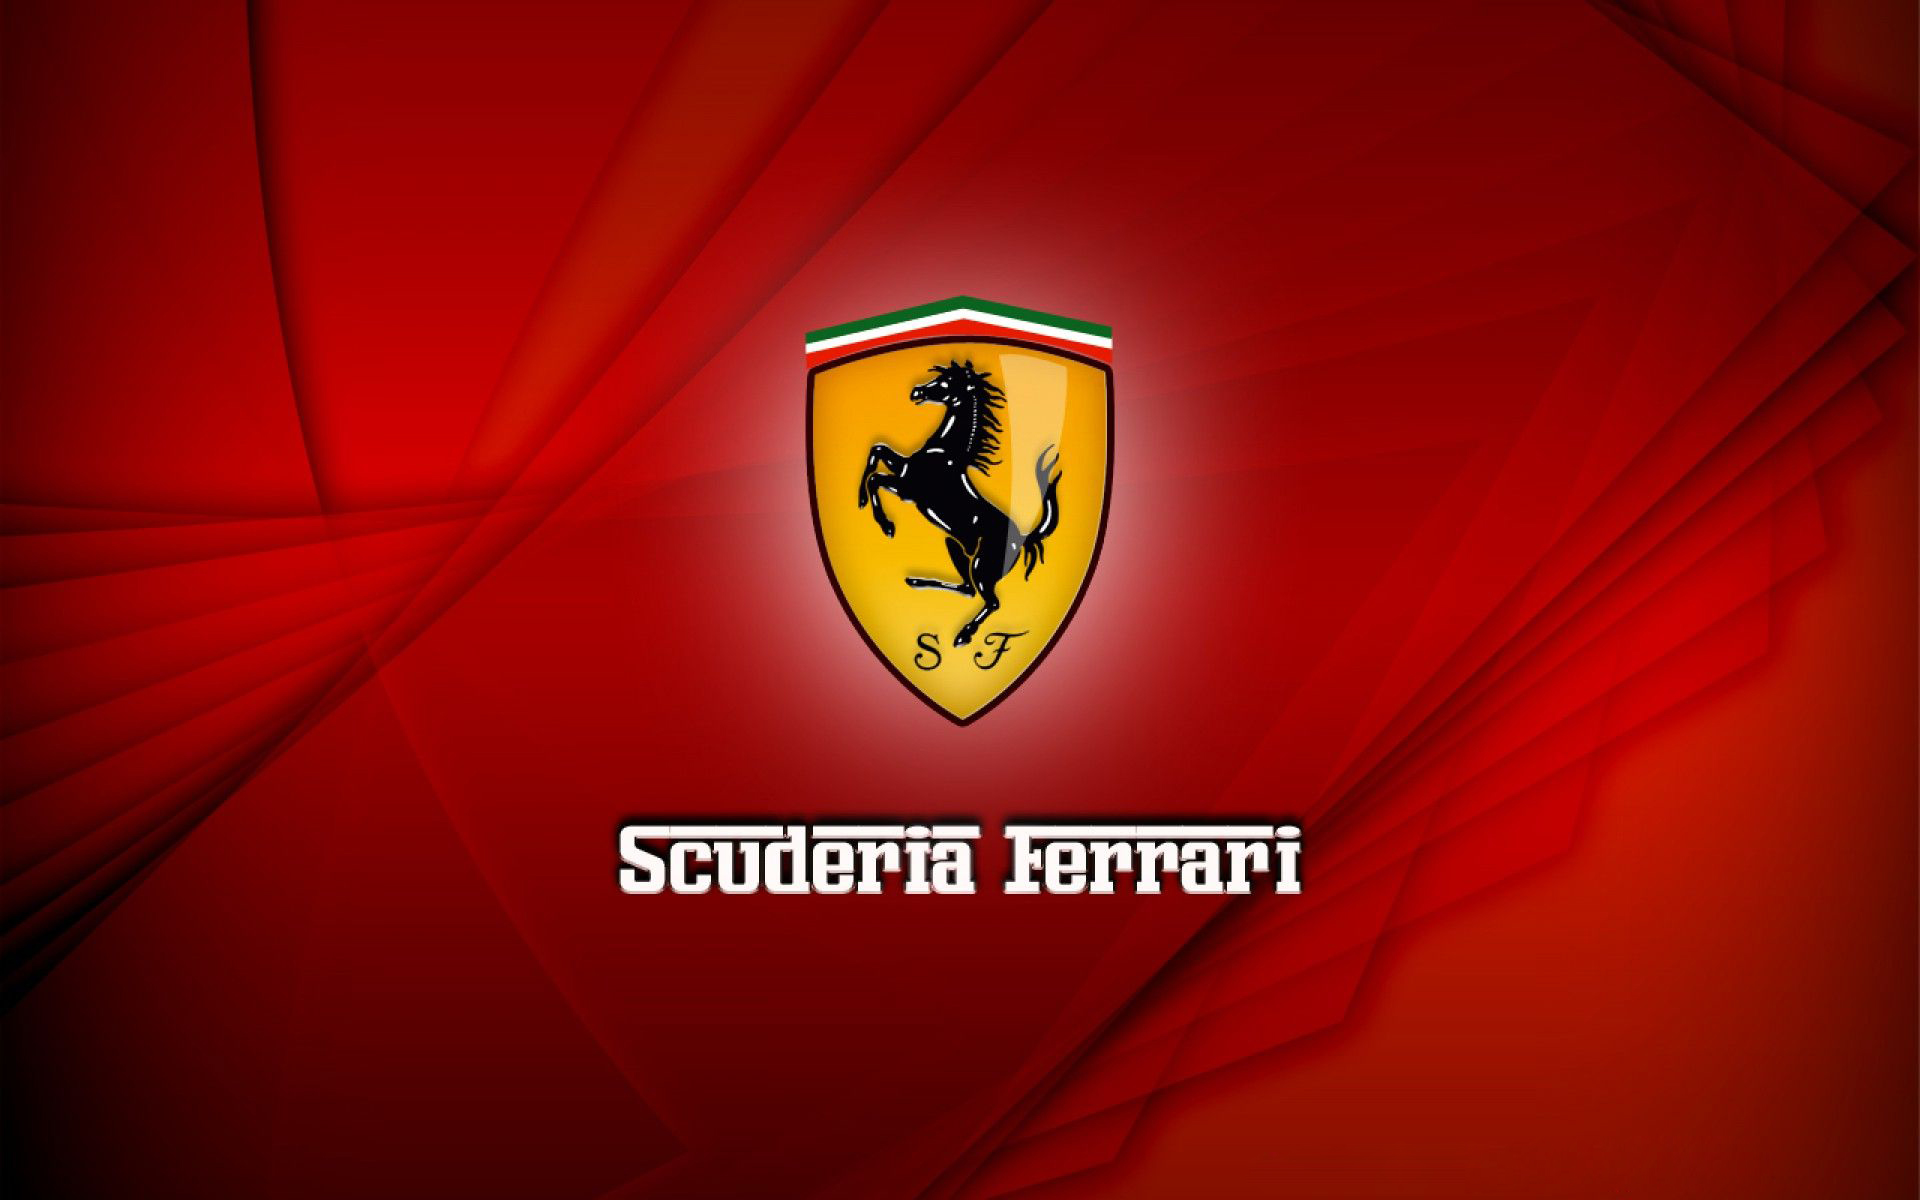 Free Download Ferrari Logo Wallpapers 1920x1200 For Your Desktop